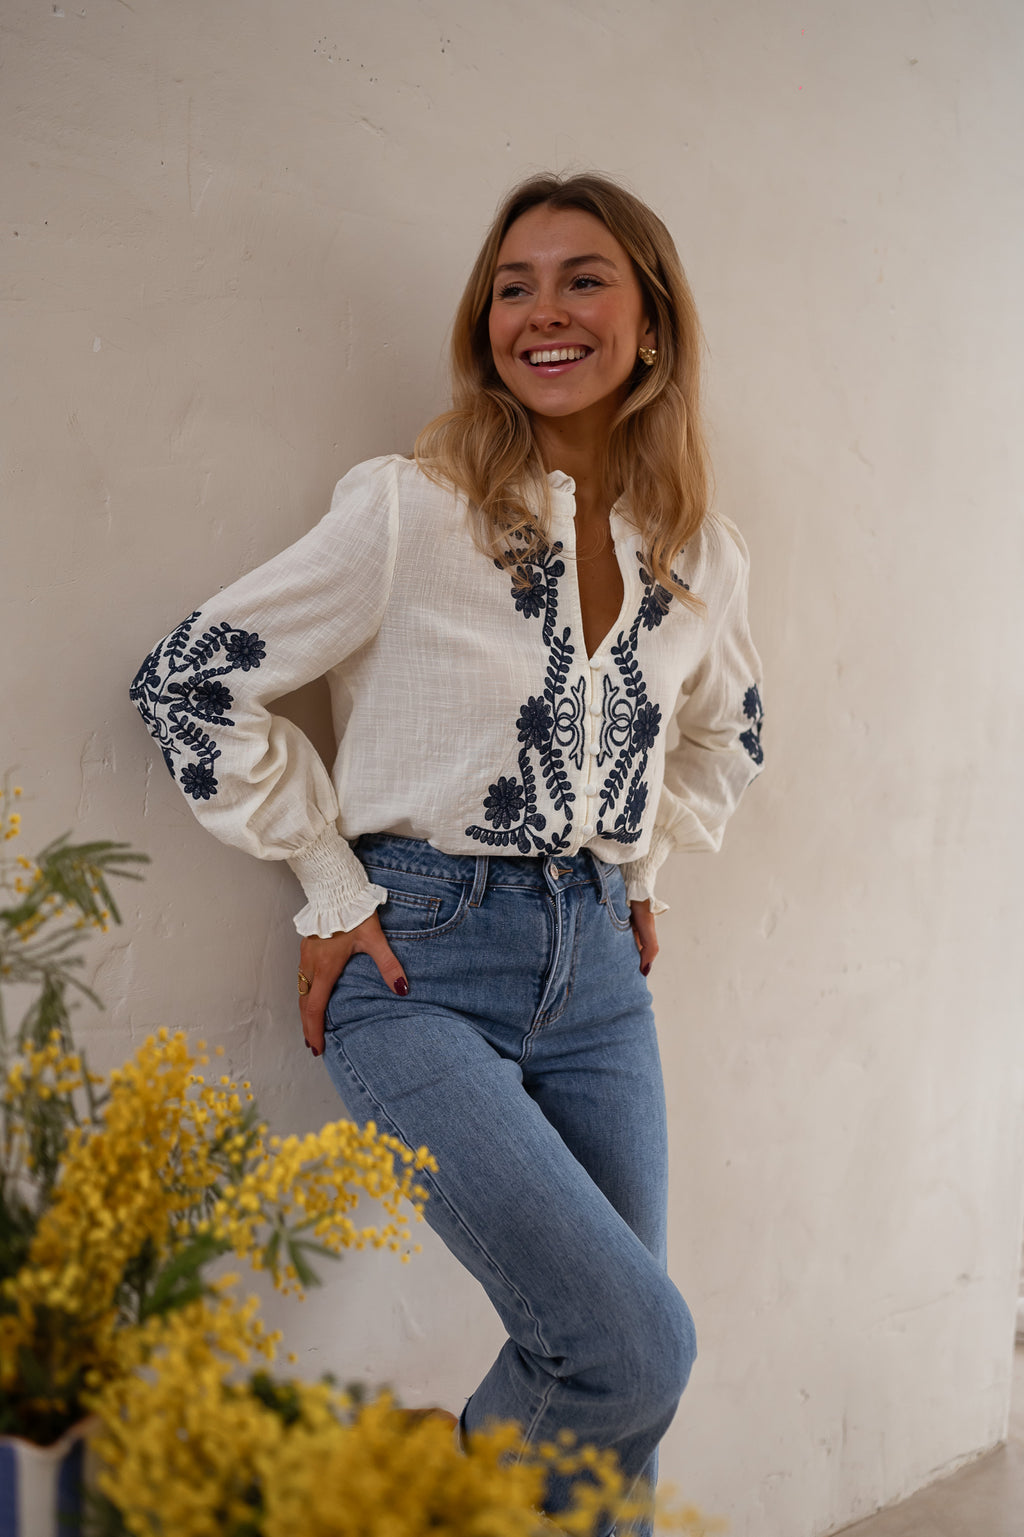 Bari blouse - patterned